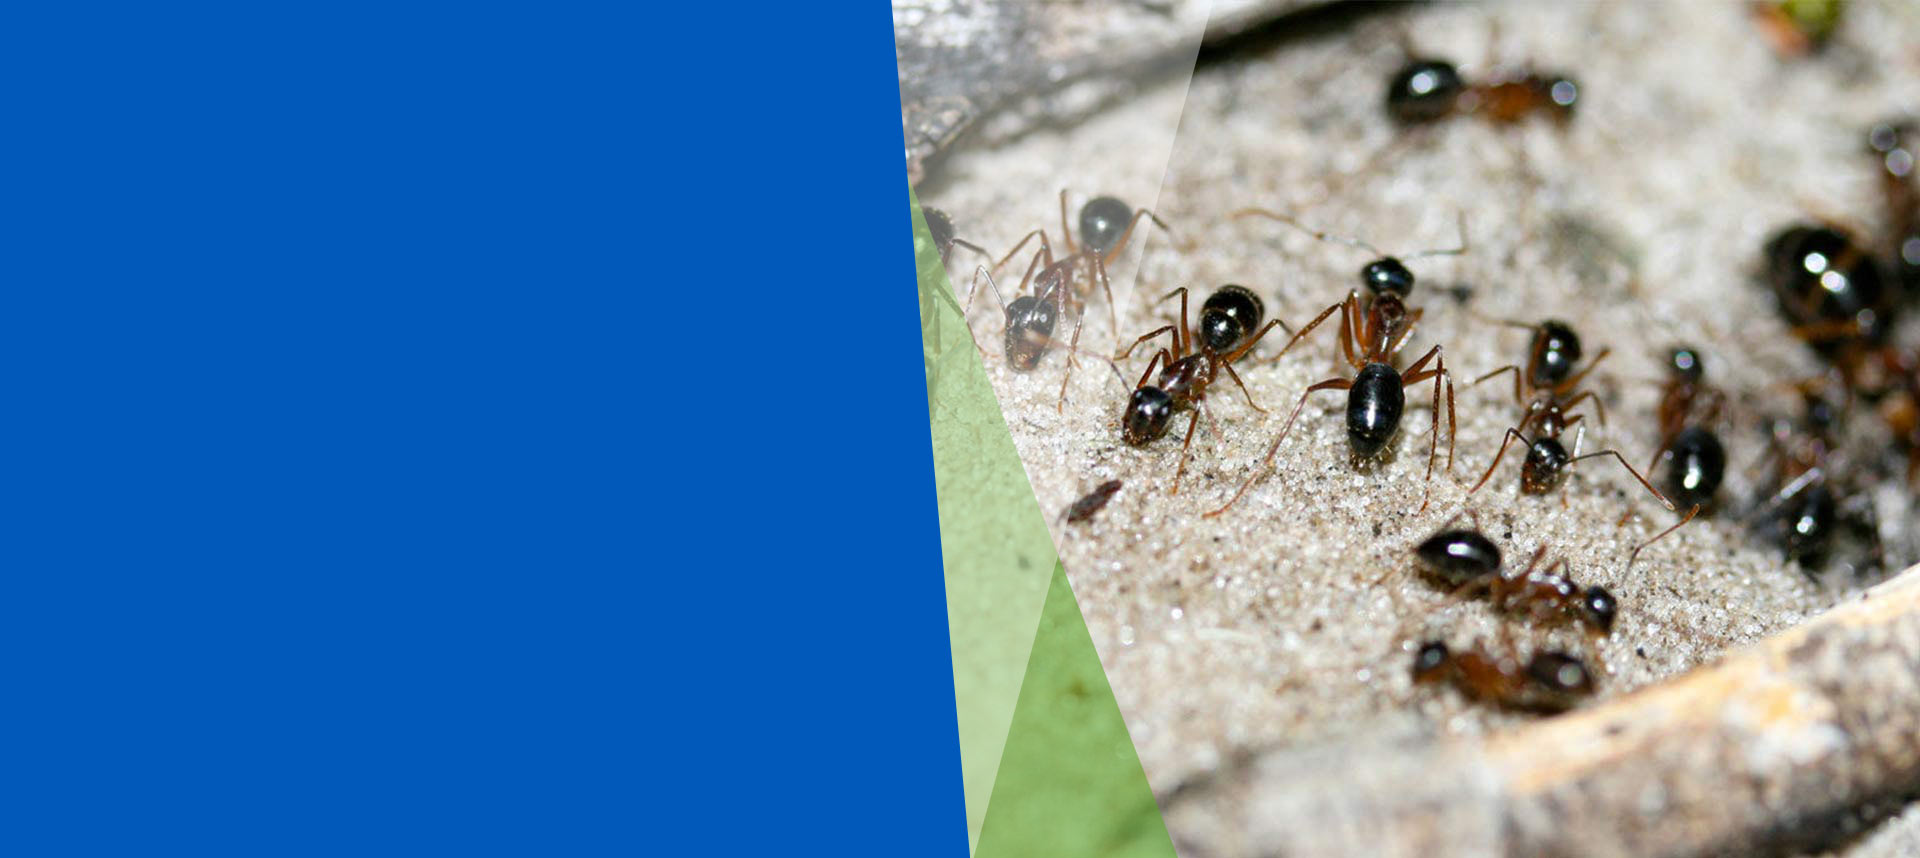 polokwane-pest-ants